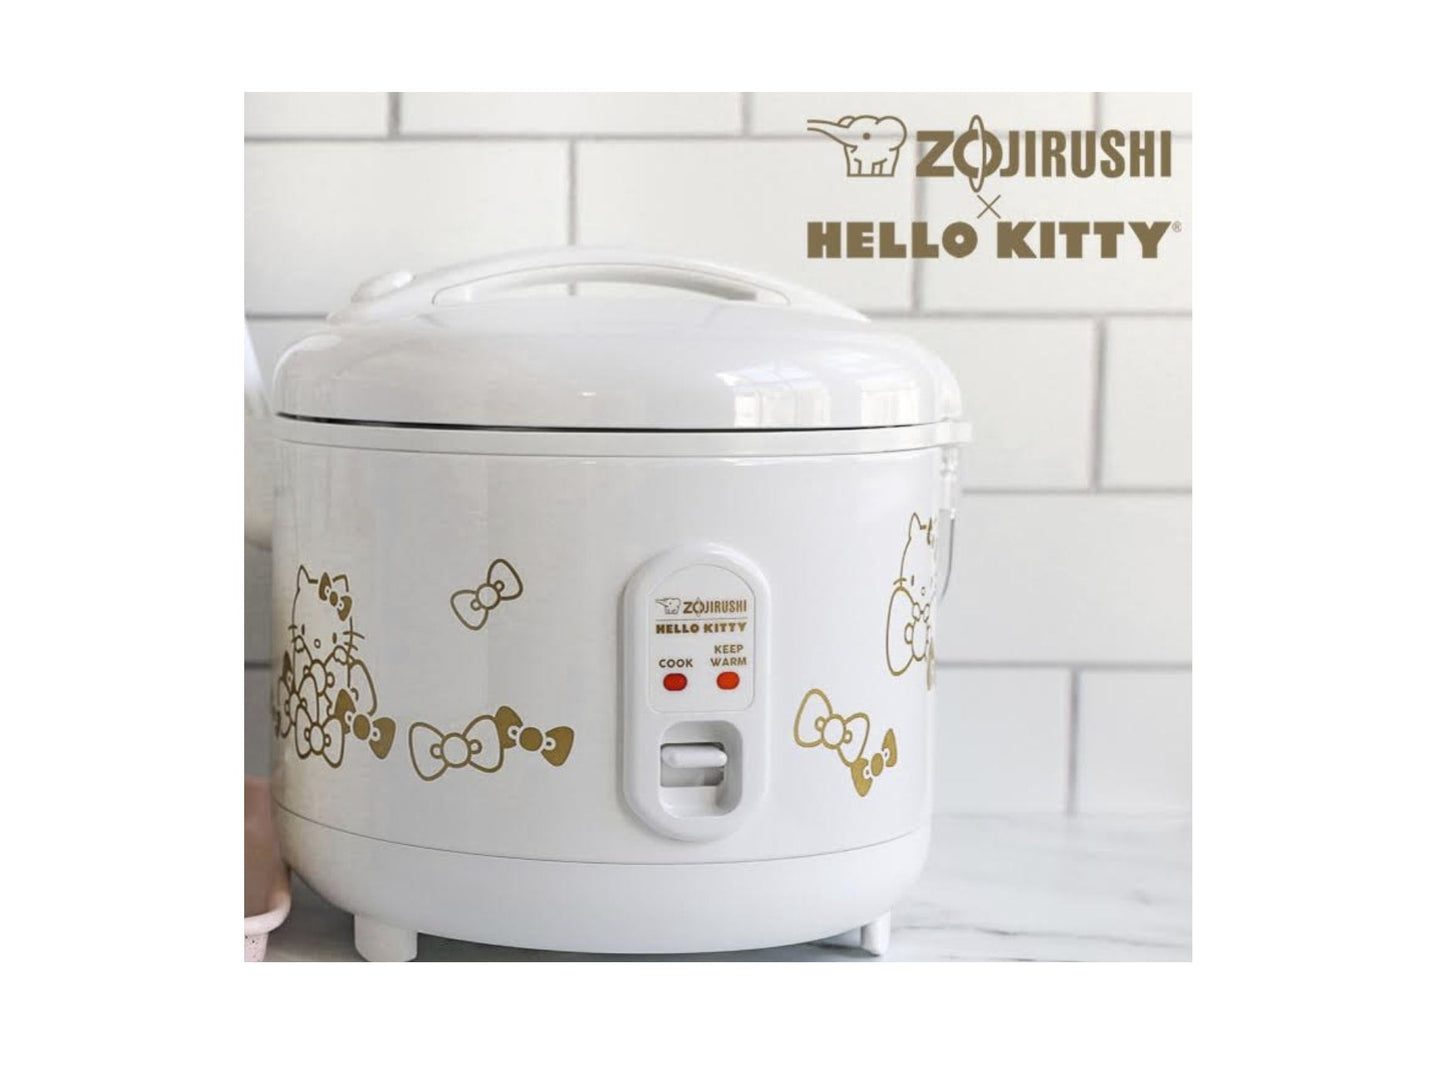 ZOJIRUSHI x HELLO KITTY Automatic Rice Cooker & Warmer